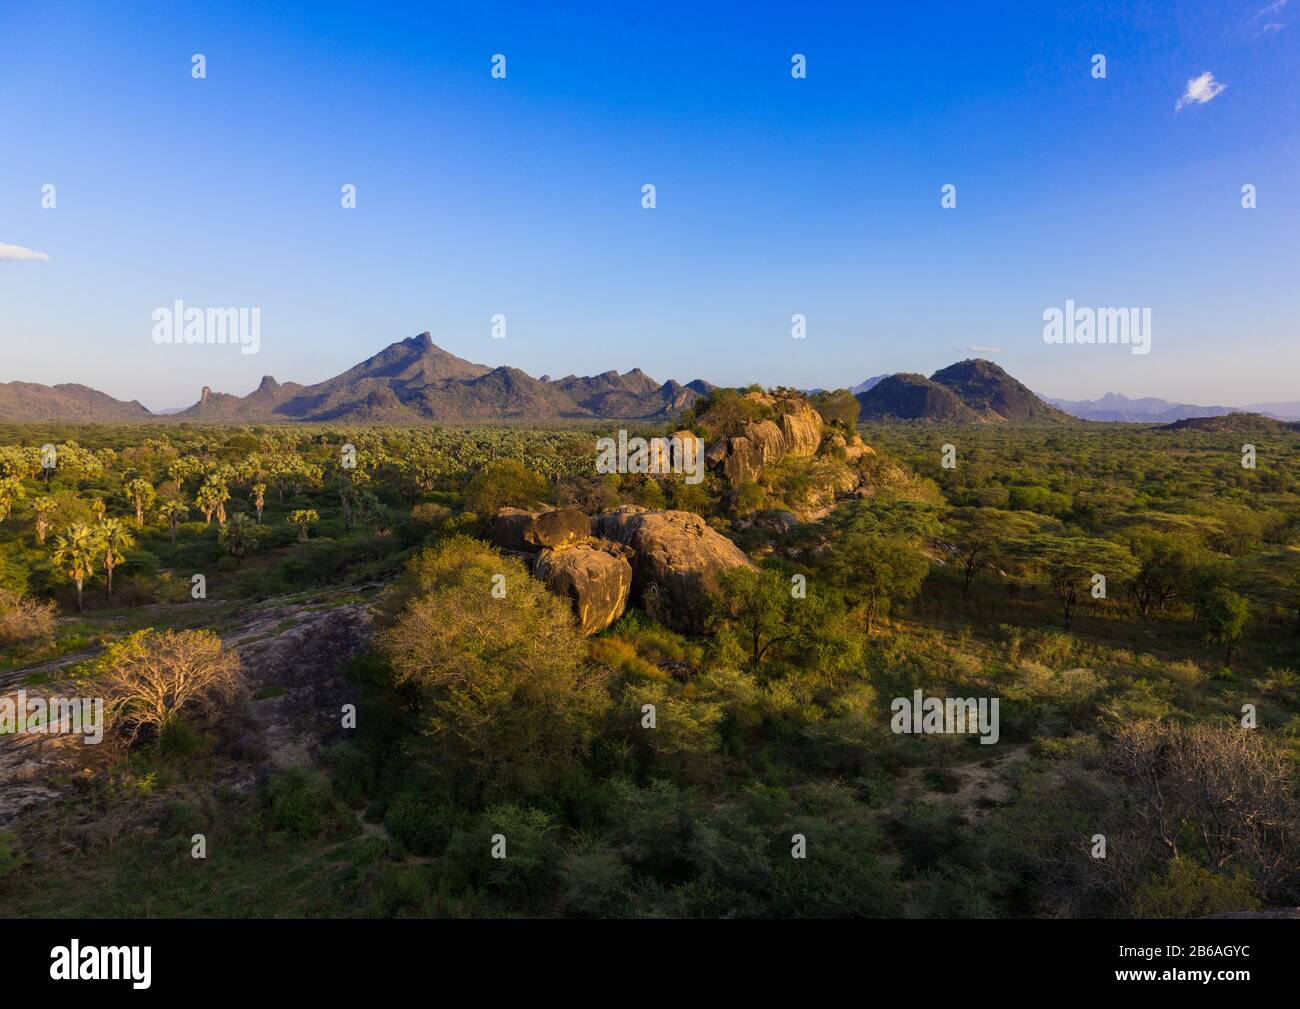 Oasis frente a las montañas de Boya, montañas de Boya, Imatong, Sudán del Sur Foto de stock